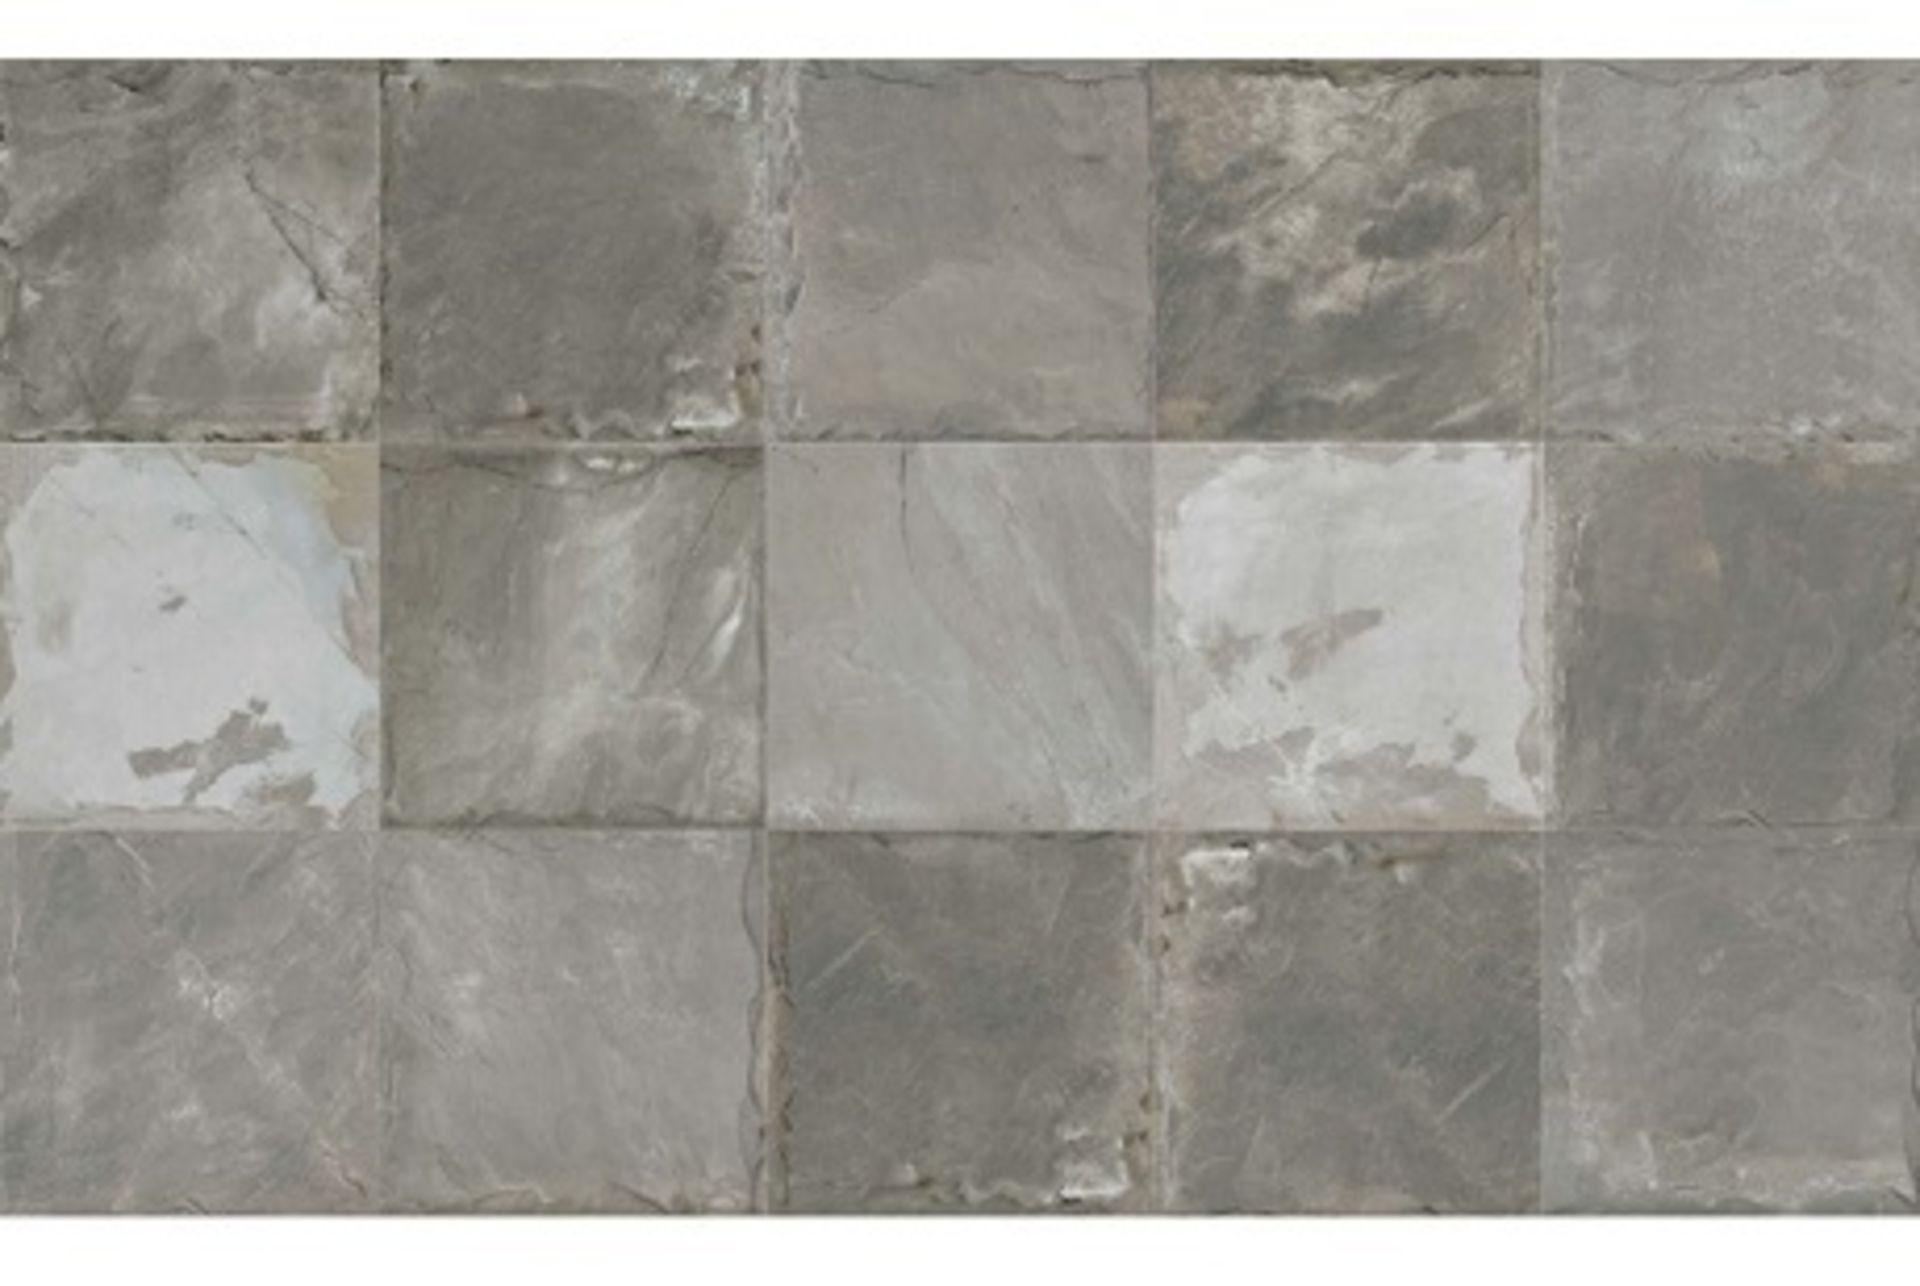 Slack Stone Natuaral - Slate Effect Porcelain Tile With Some Design 40X40Cm 90 Boxes (57.6Sqm) - Image 2 of 3